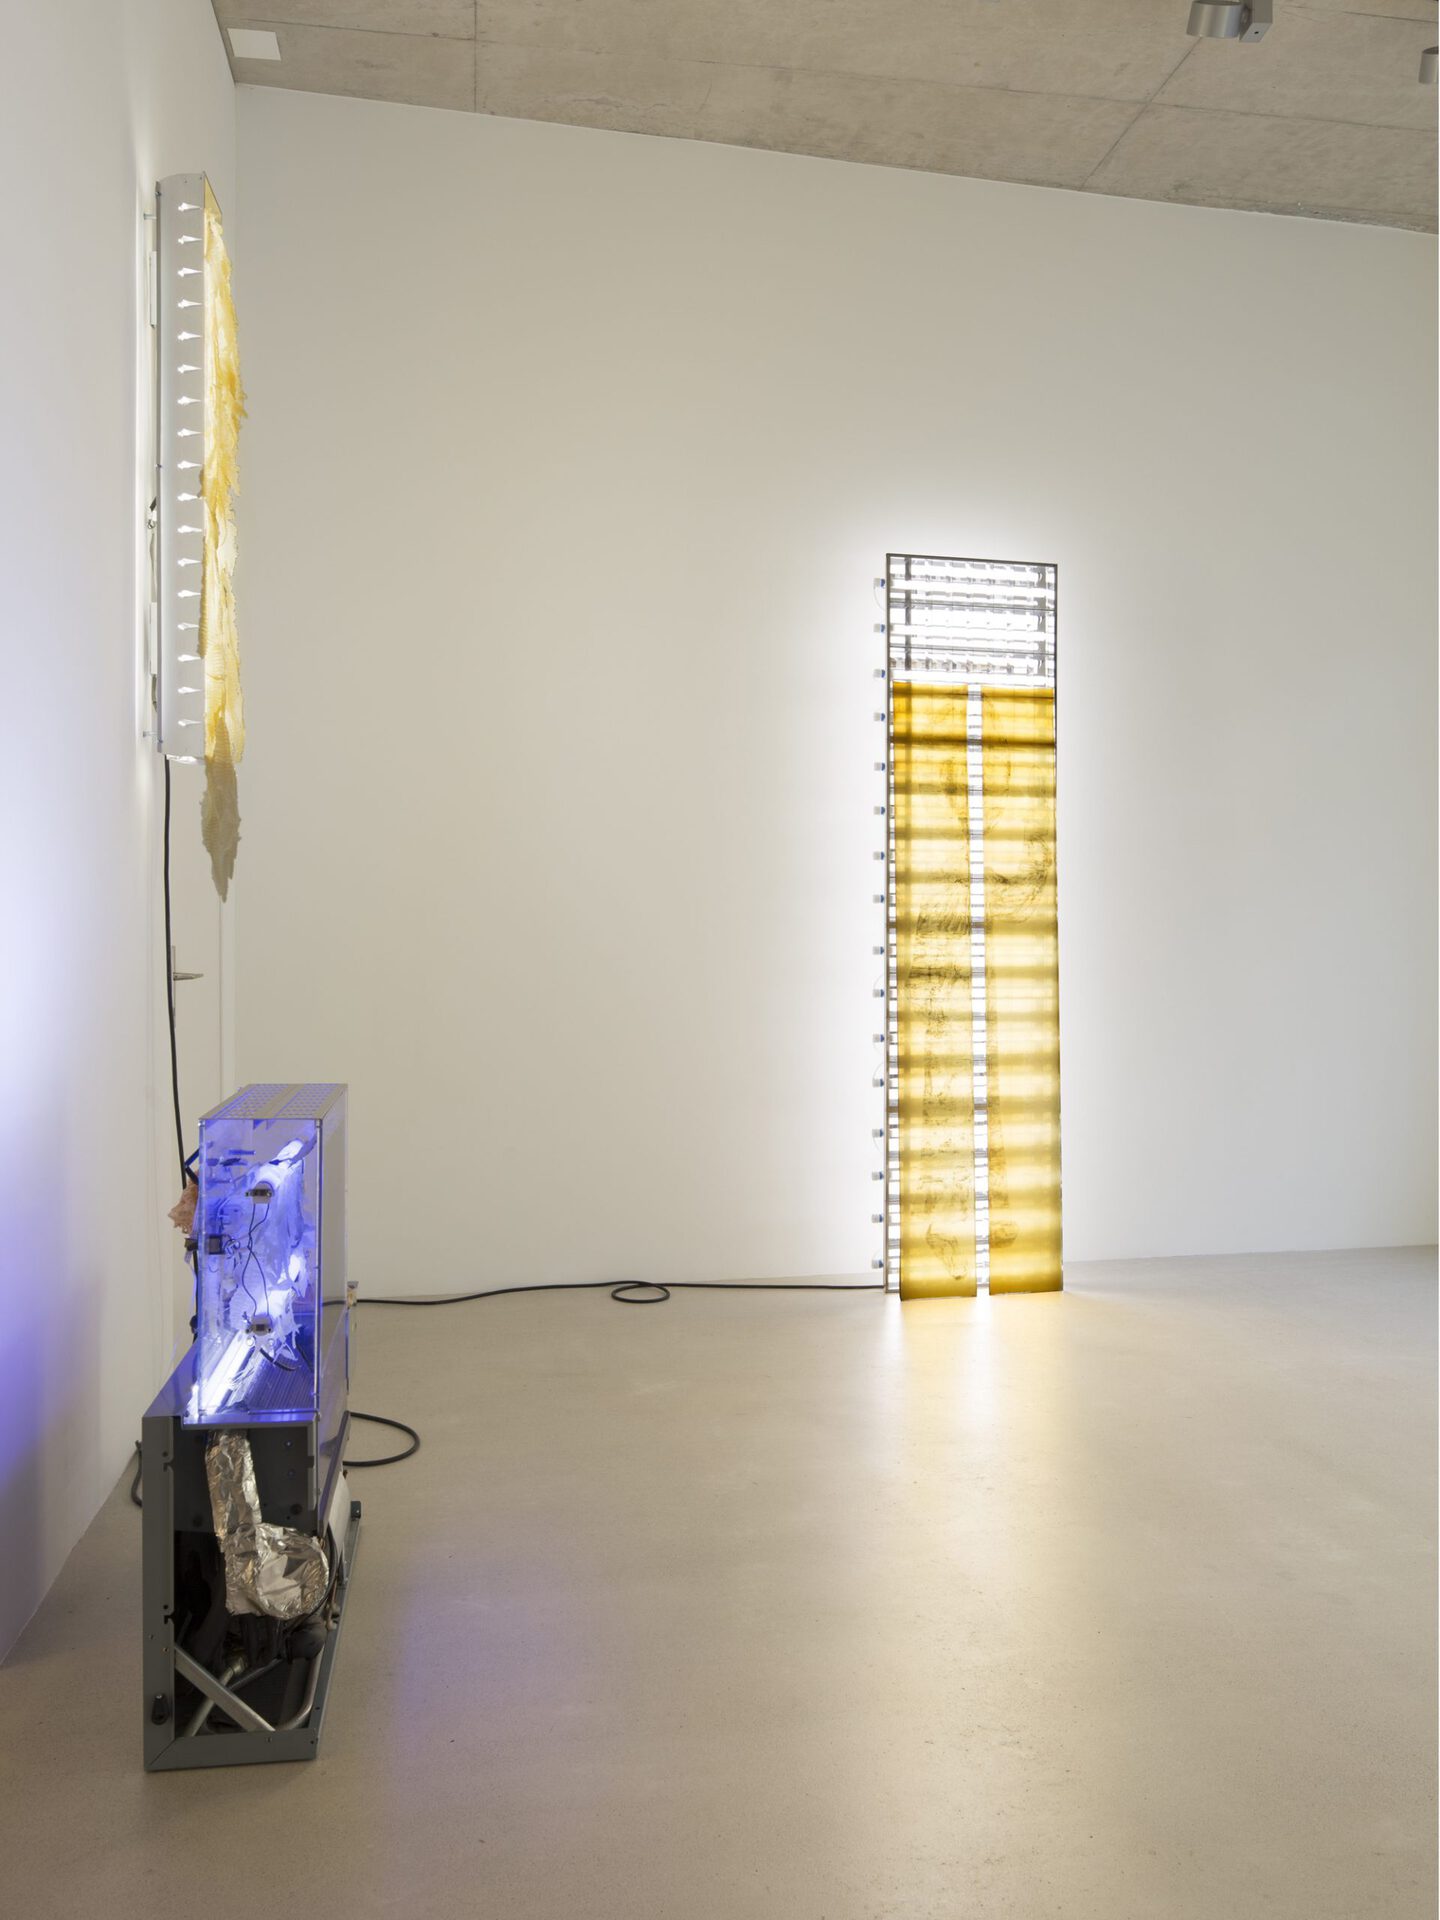 Exhibition View Chloé Delarue Solo Show «TAFAA – BLUE LIGHTS TENDERNESS» at Windhager von Kaenel, Zurich, 2021 / Photo: © Florimond Dupont / Courtesy: the artist and Windhager von Kaenel